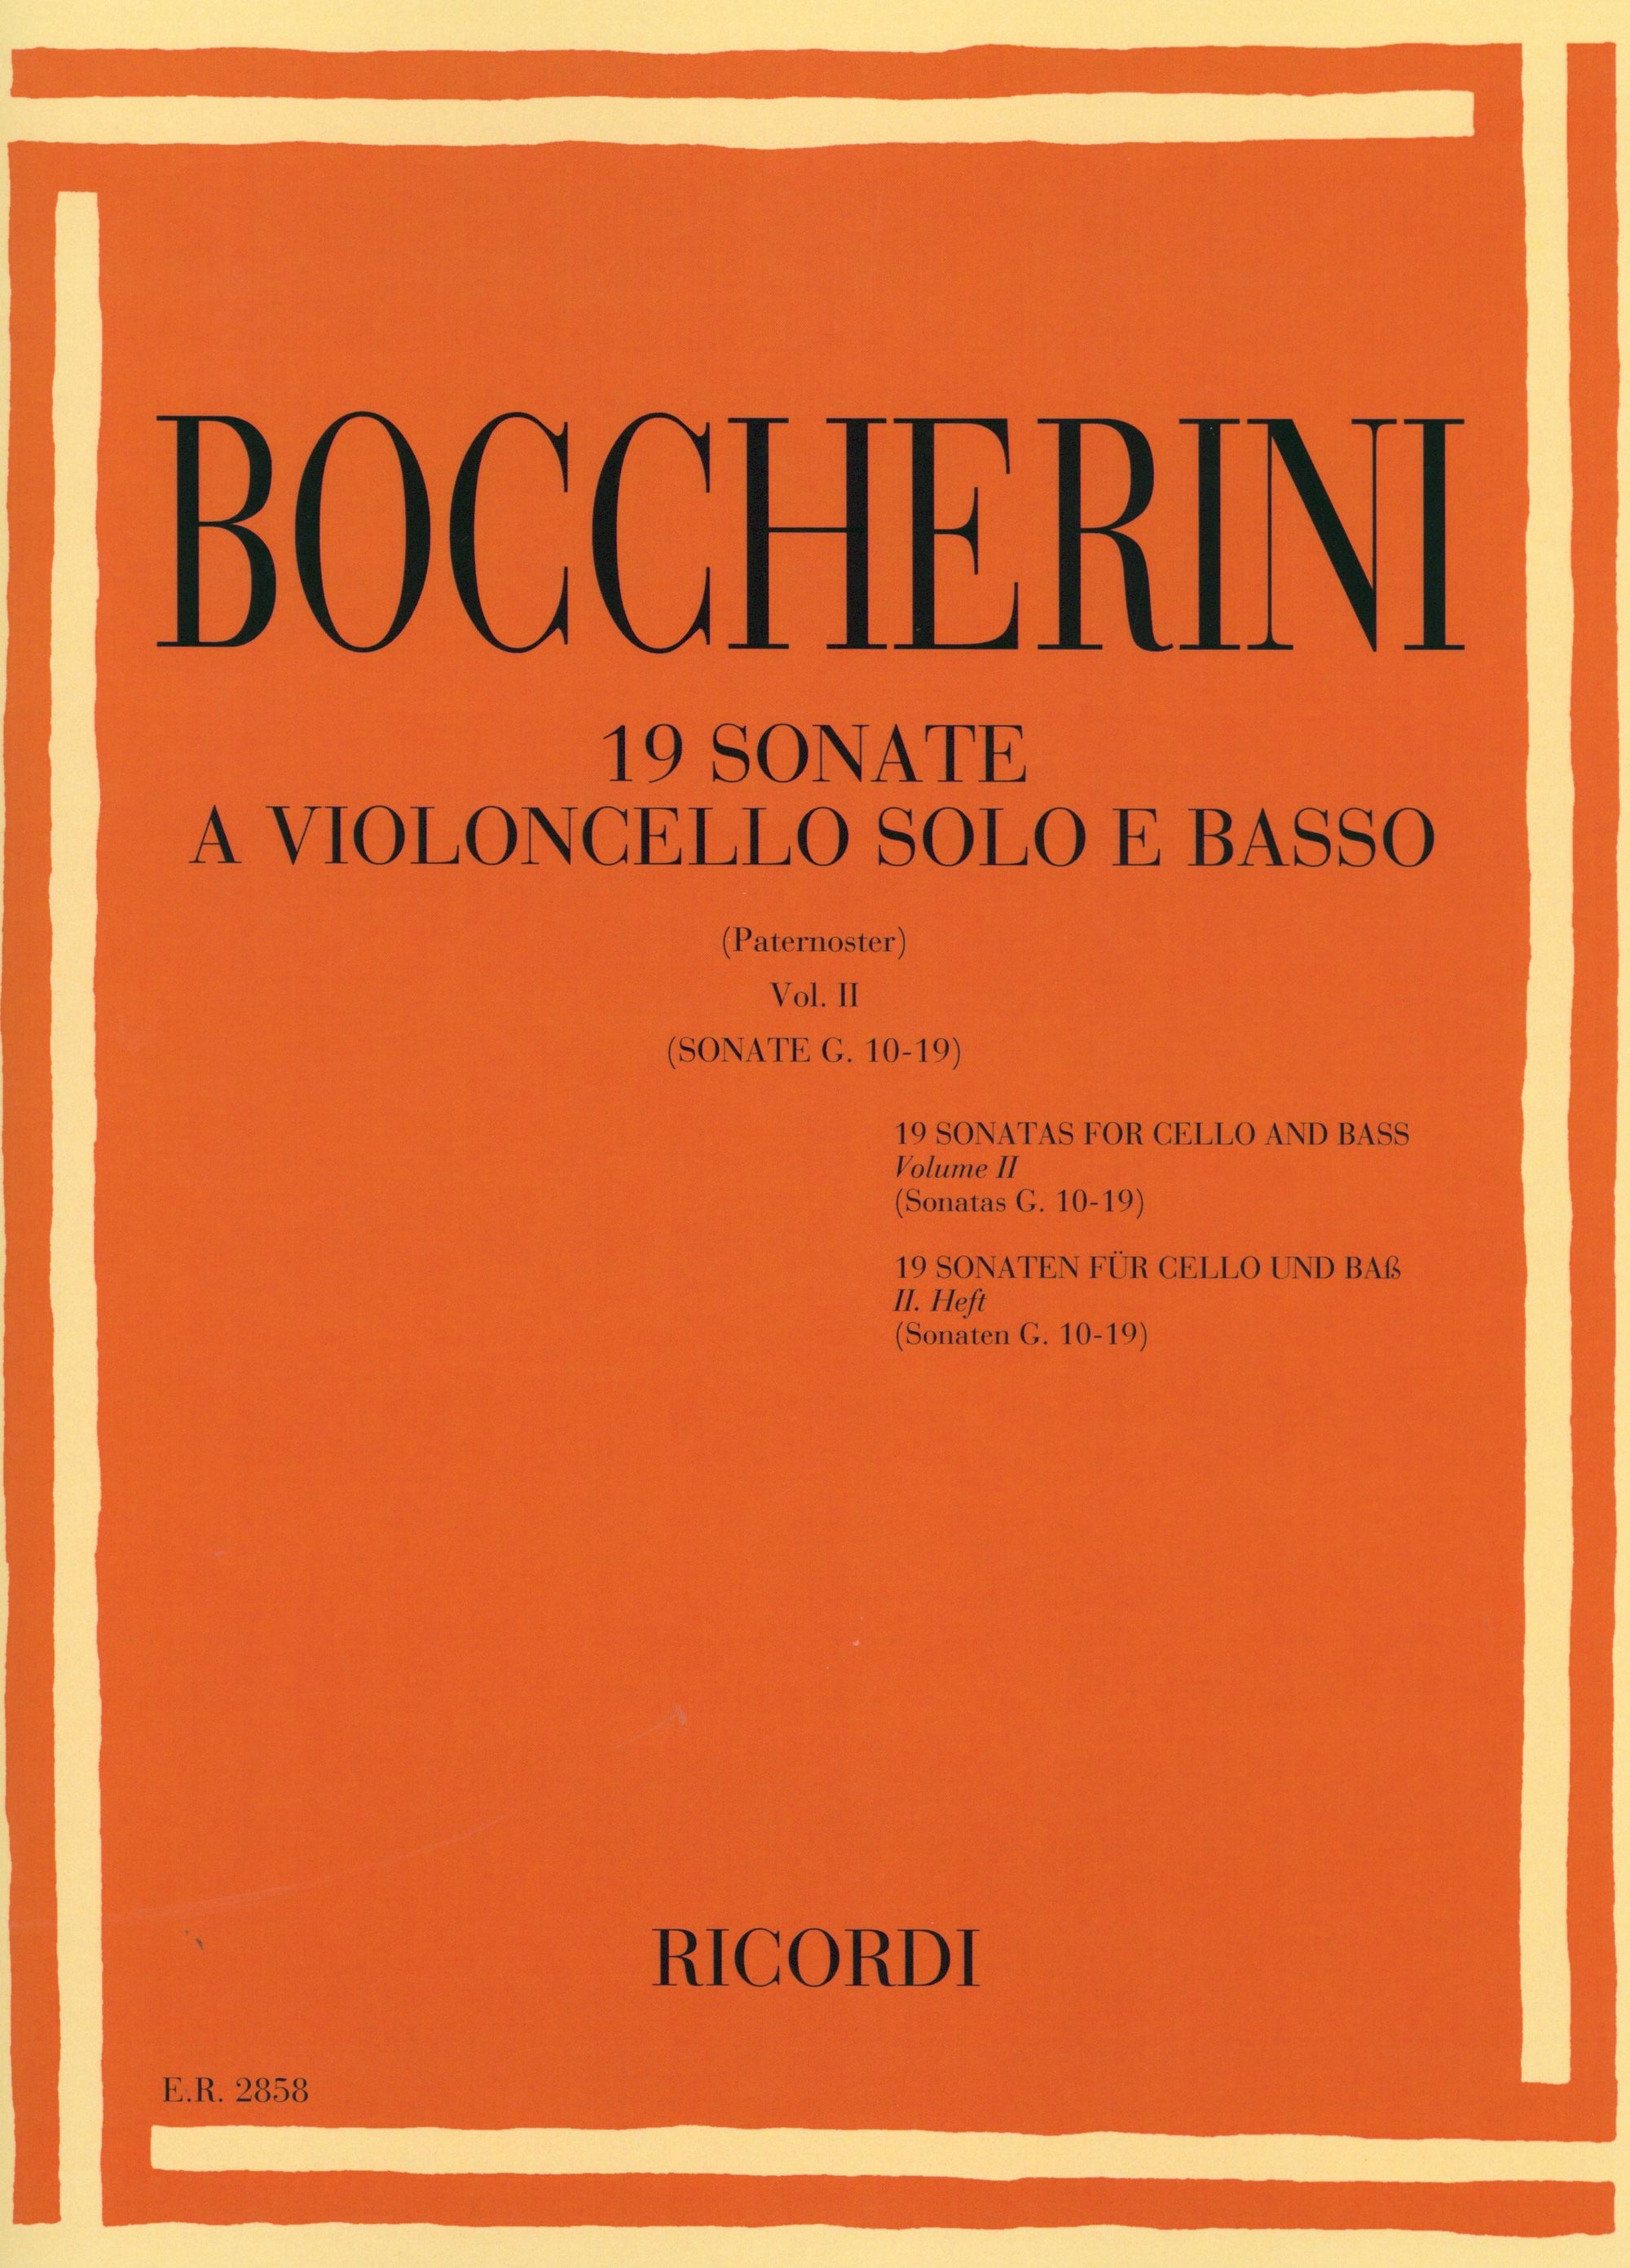 Boccherini: Cello Sonatas - Volume 2 (G. 10-19)